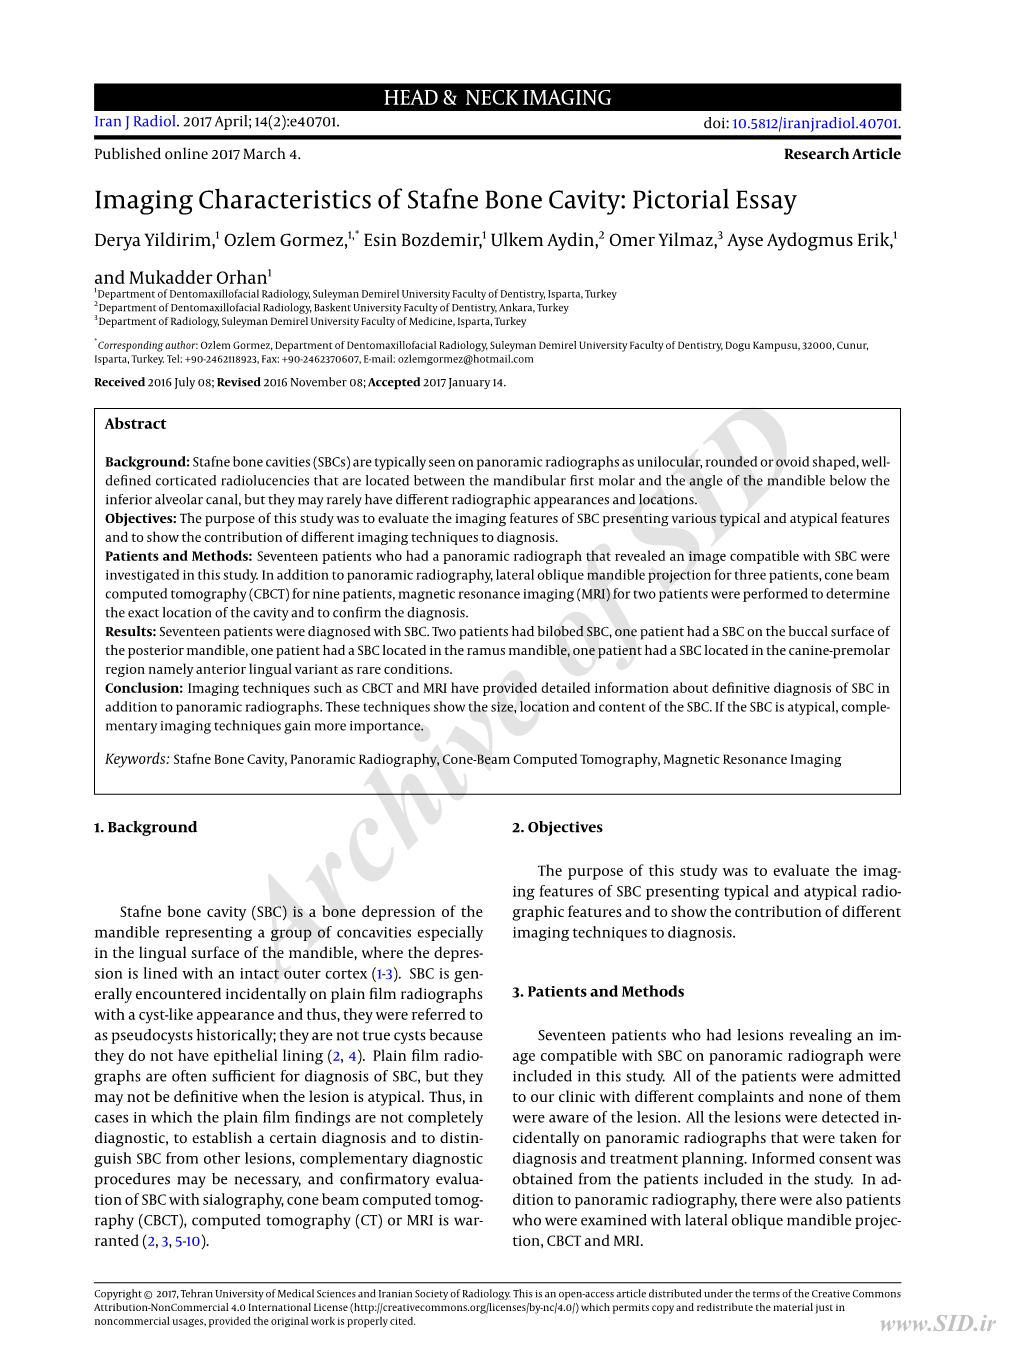 Imaging Characteristics of Stafne Bone Cavity: Pictorial Essay